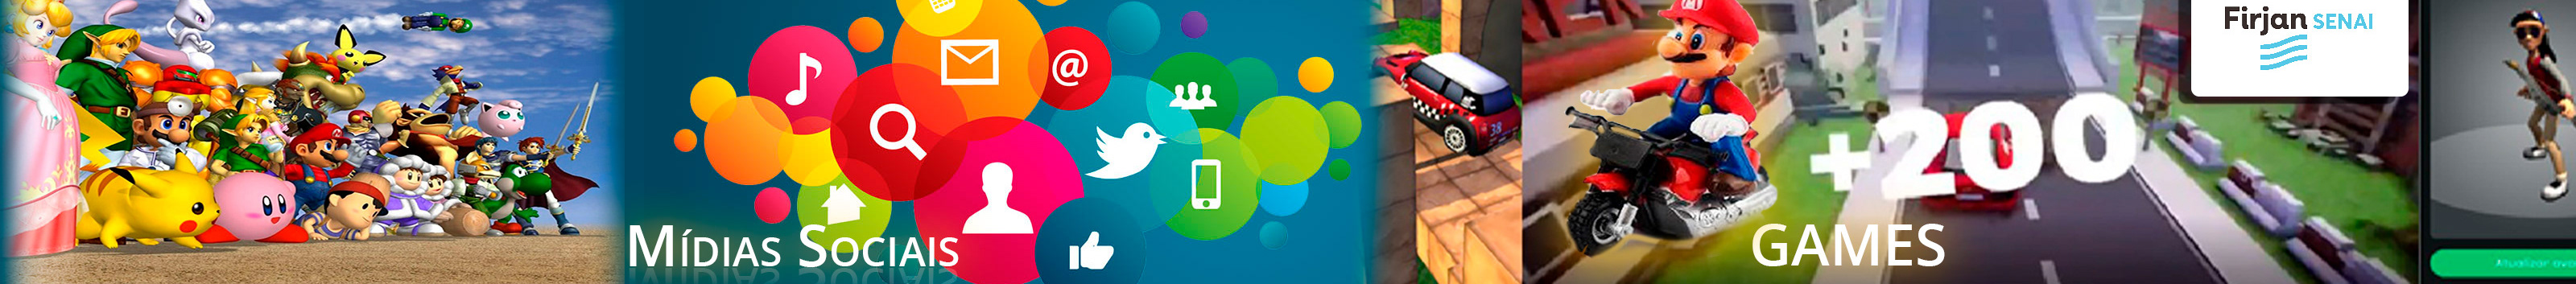 Firjan SENAI RJ  Maracanã - Mídias Socias & Jogos Digitais's profile banner